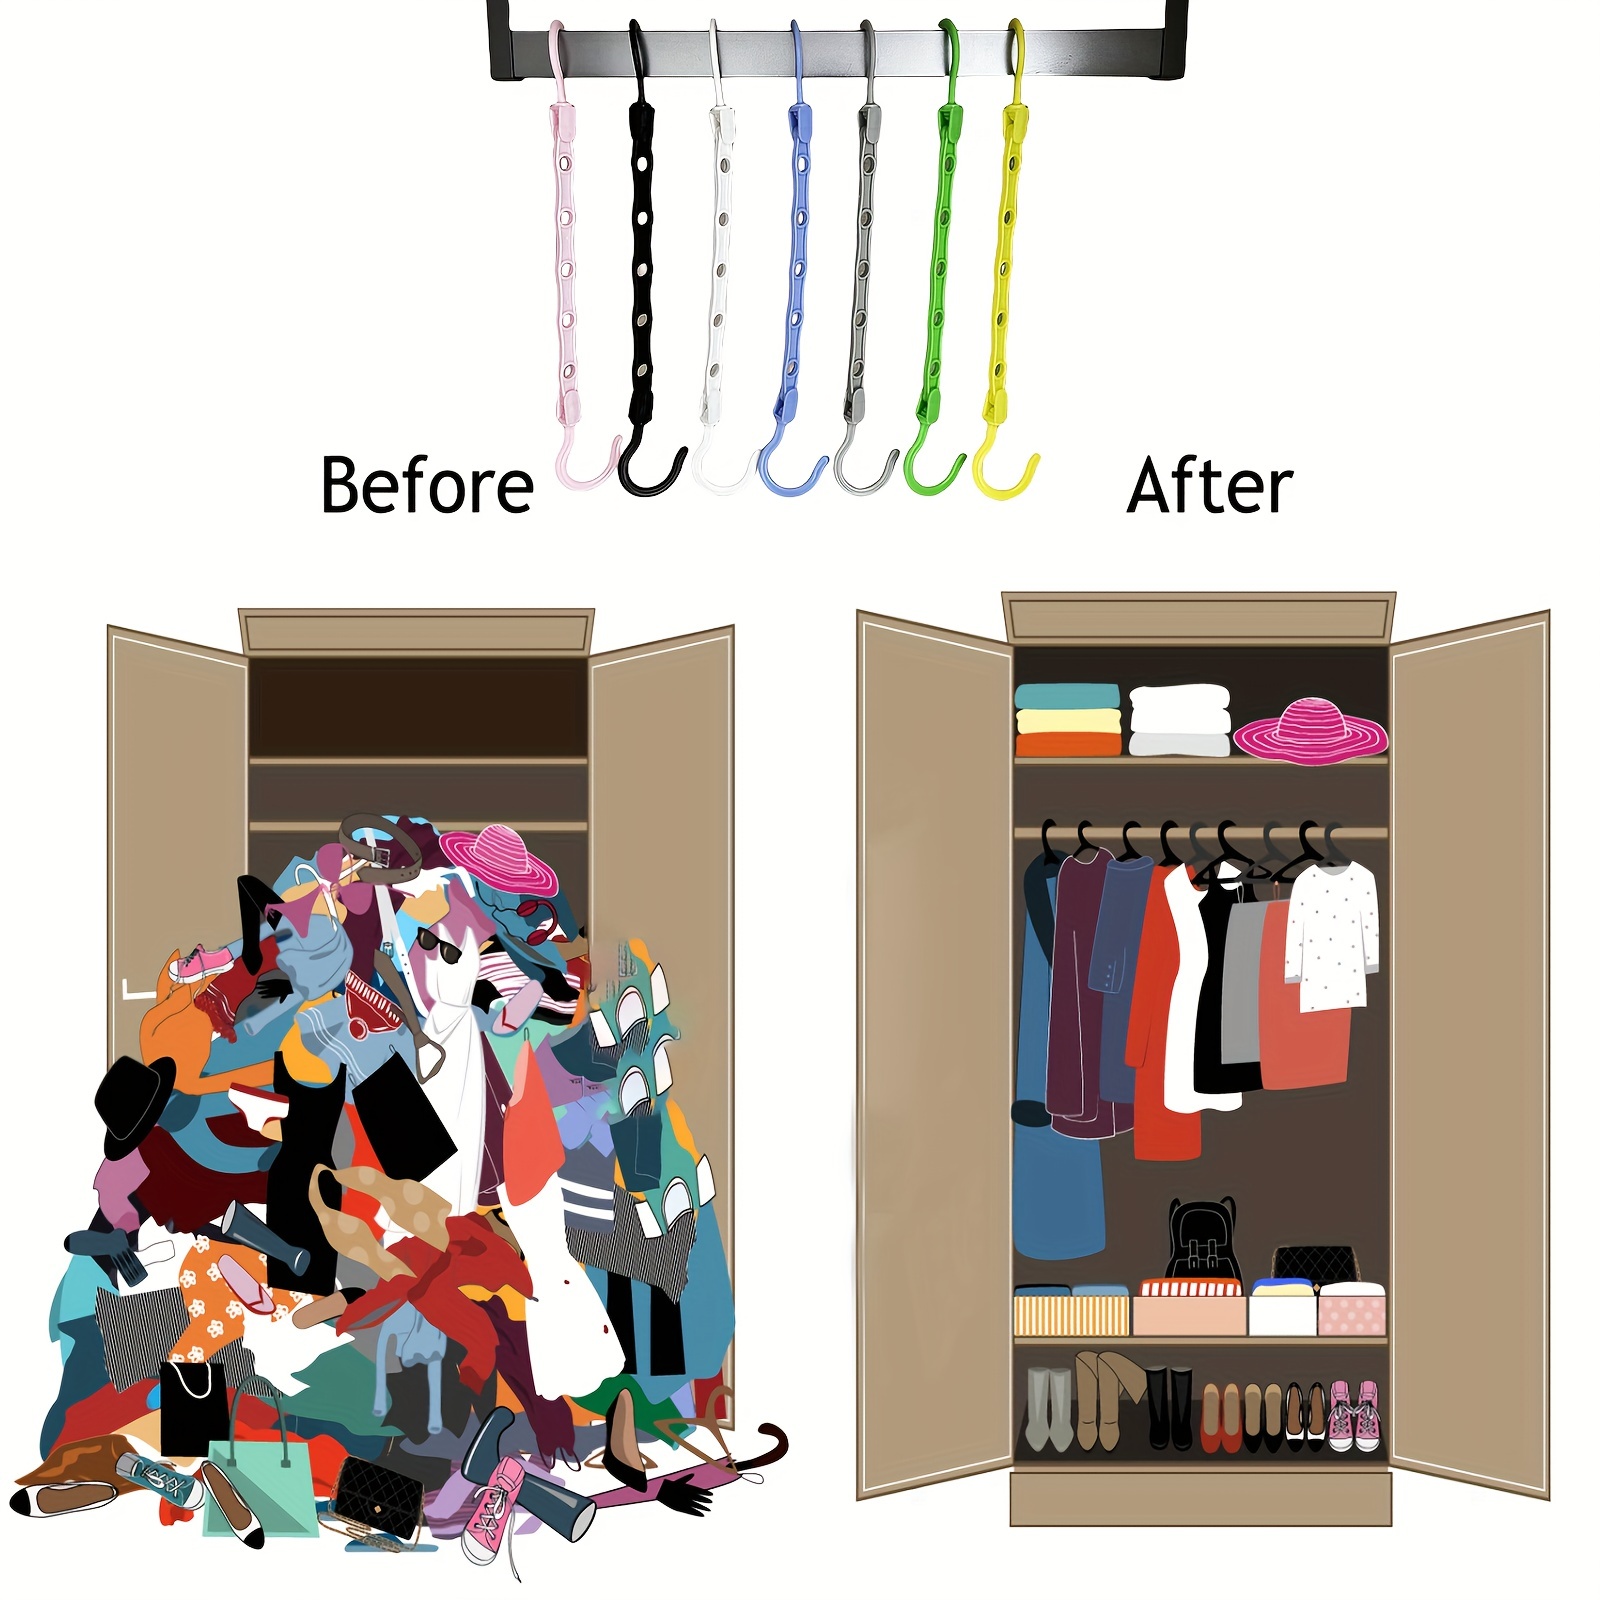 10pcs Space Saving Sturdy Closet Hangers, Closet Organize And Storage Smart  Plastic Clothes Hanger, Organizer For Wardrobe Apartment College Dorm Room